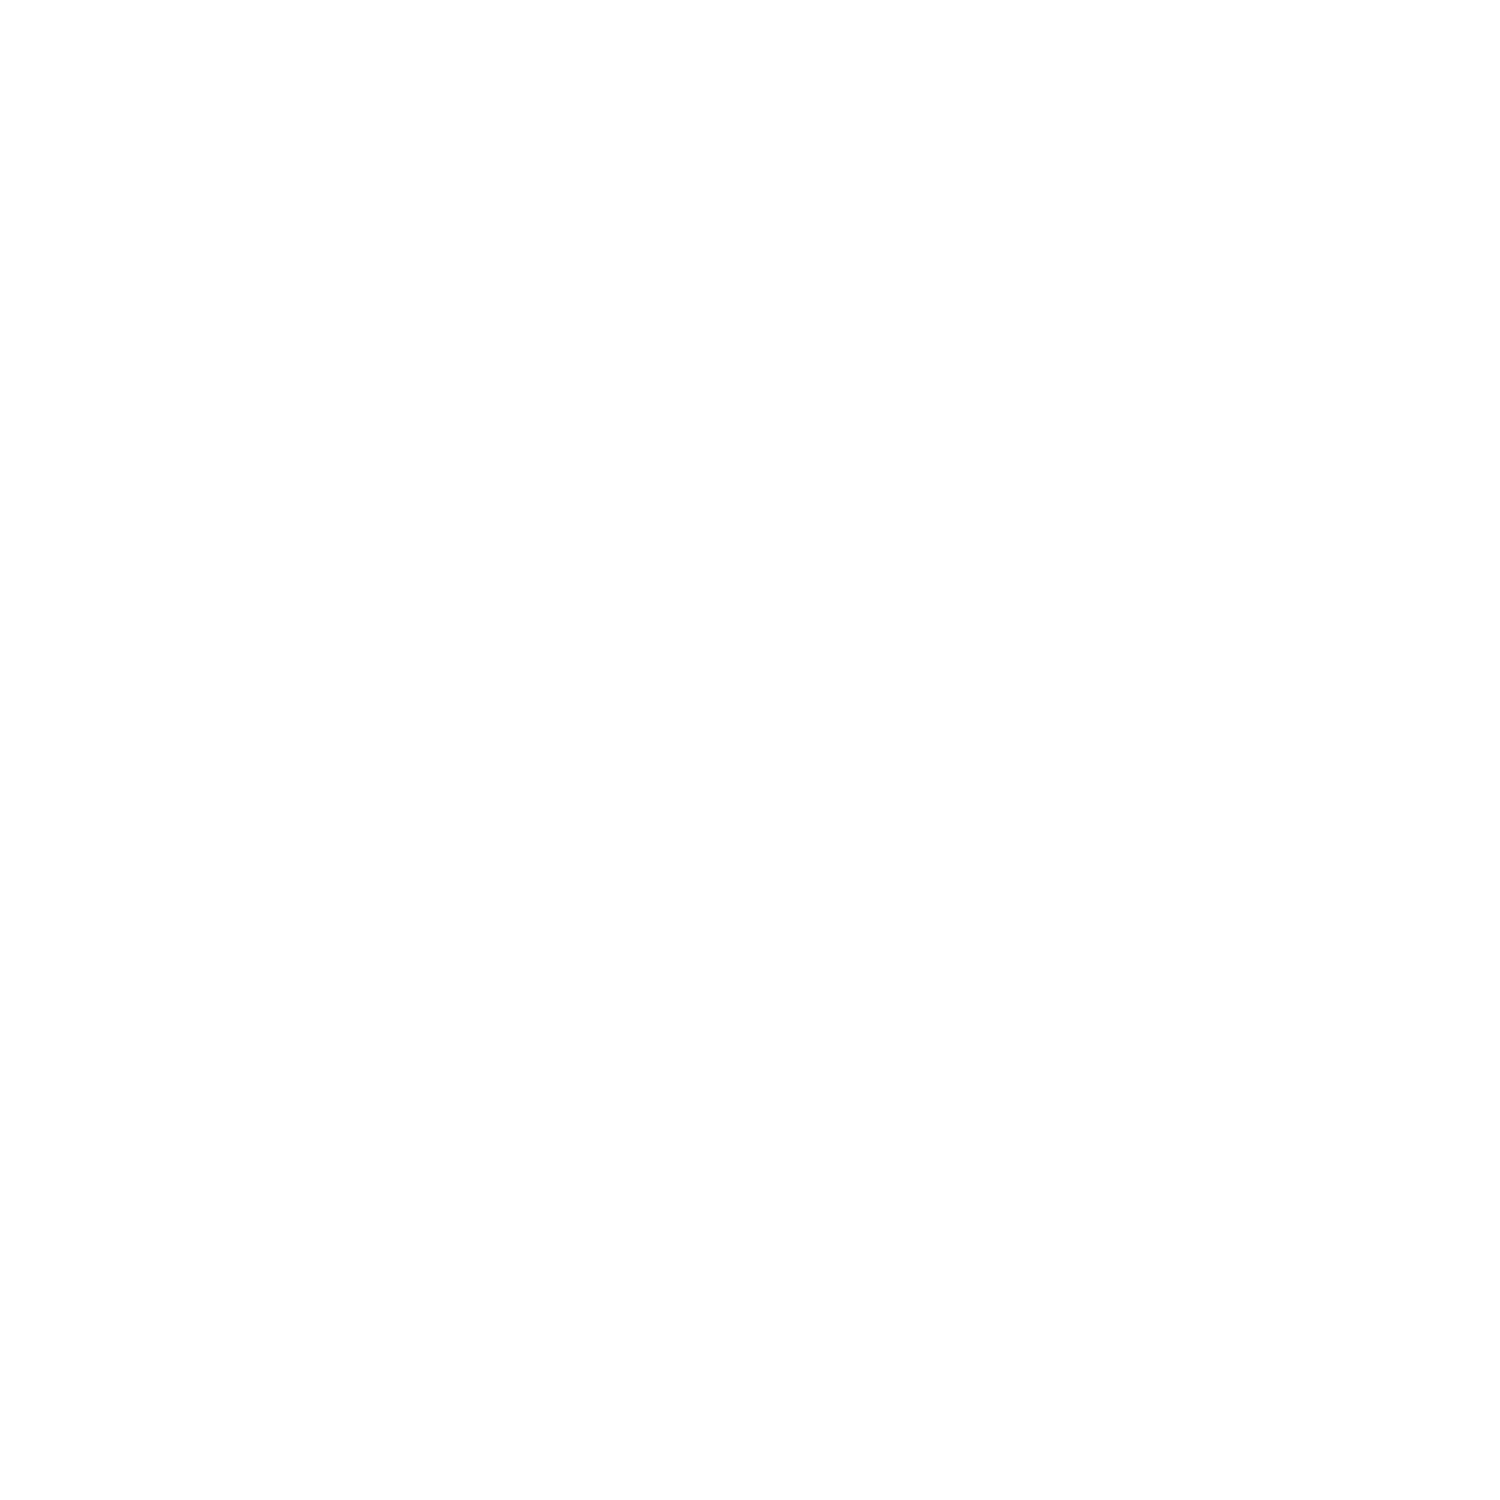 Latin for Glory Design Studio